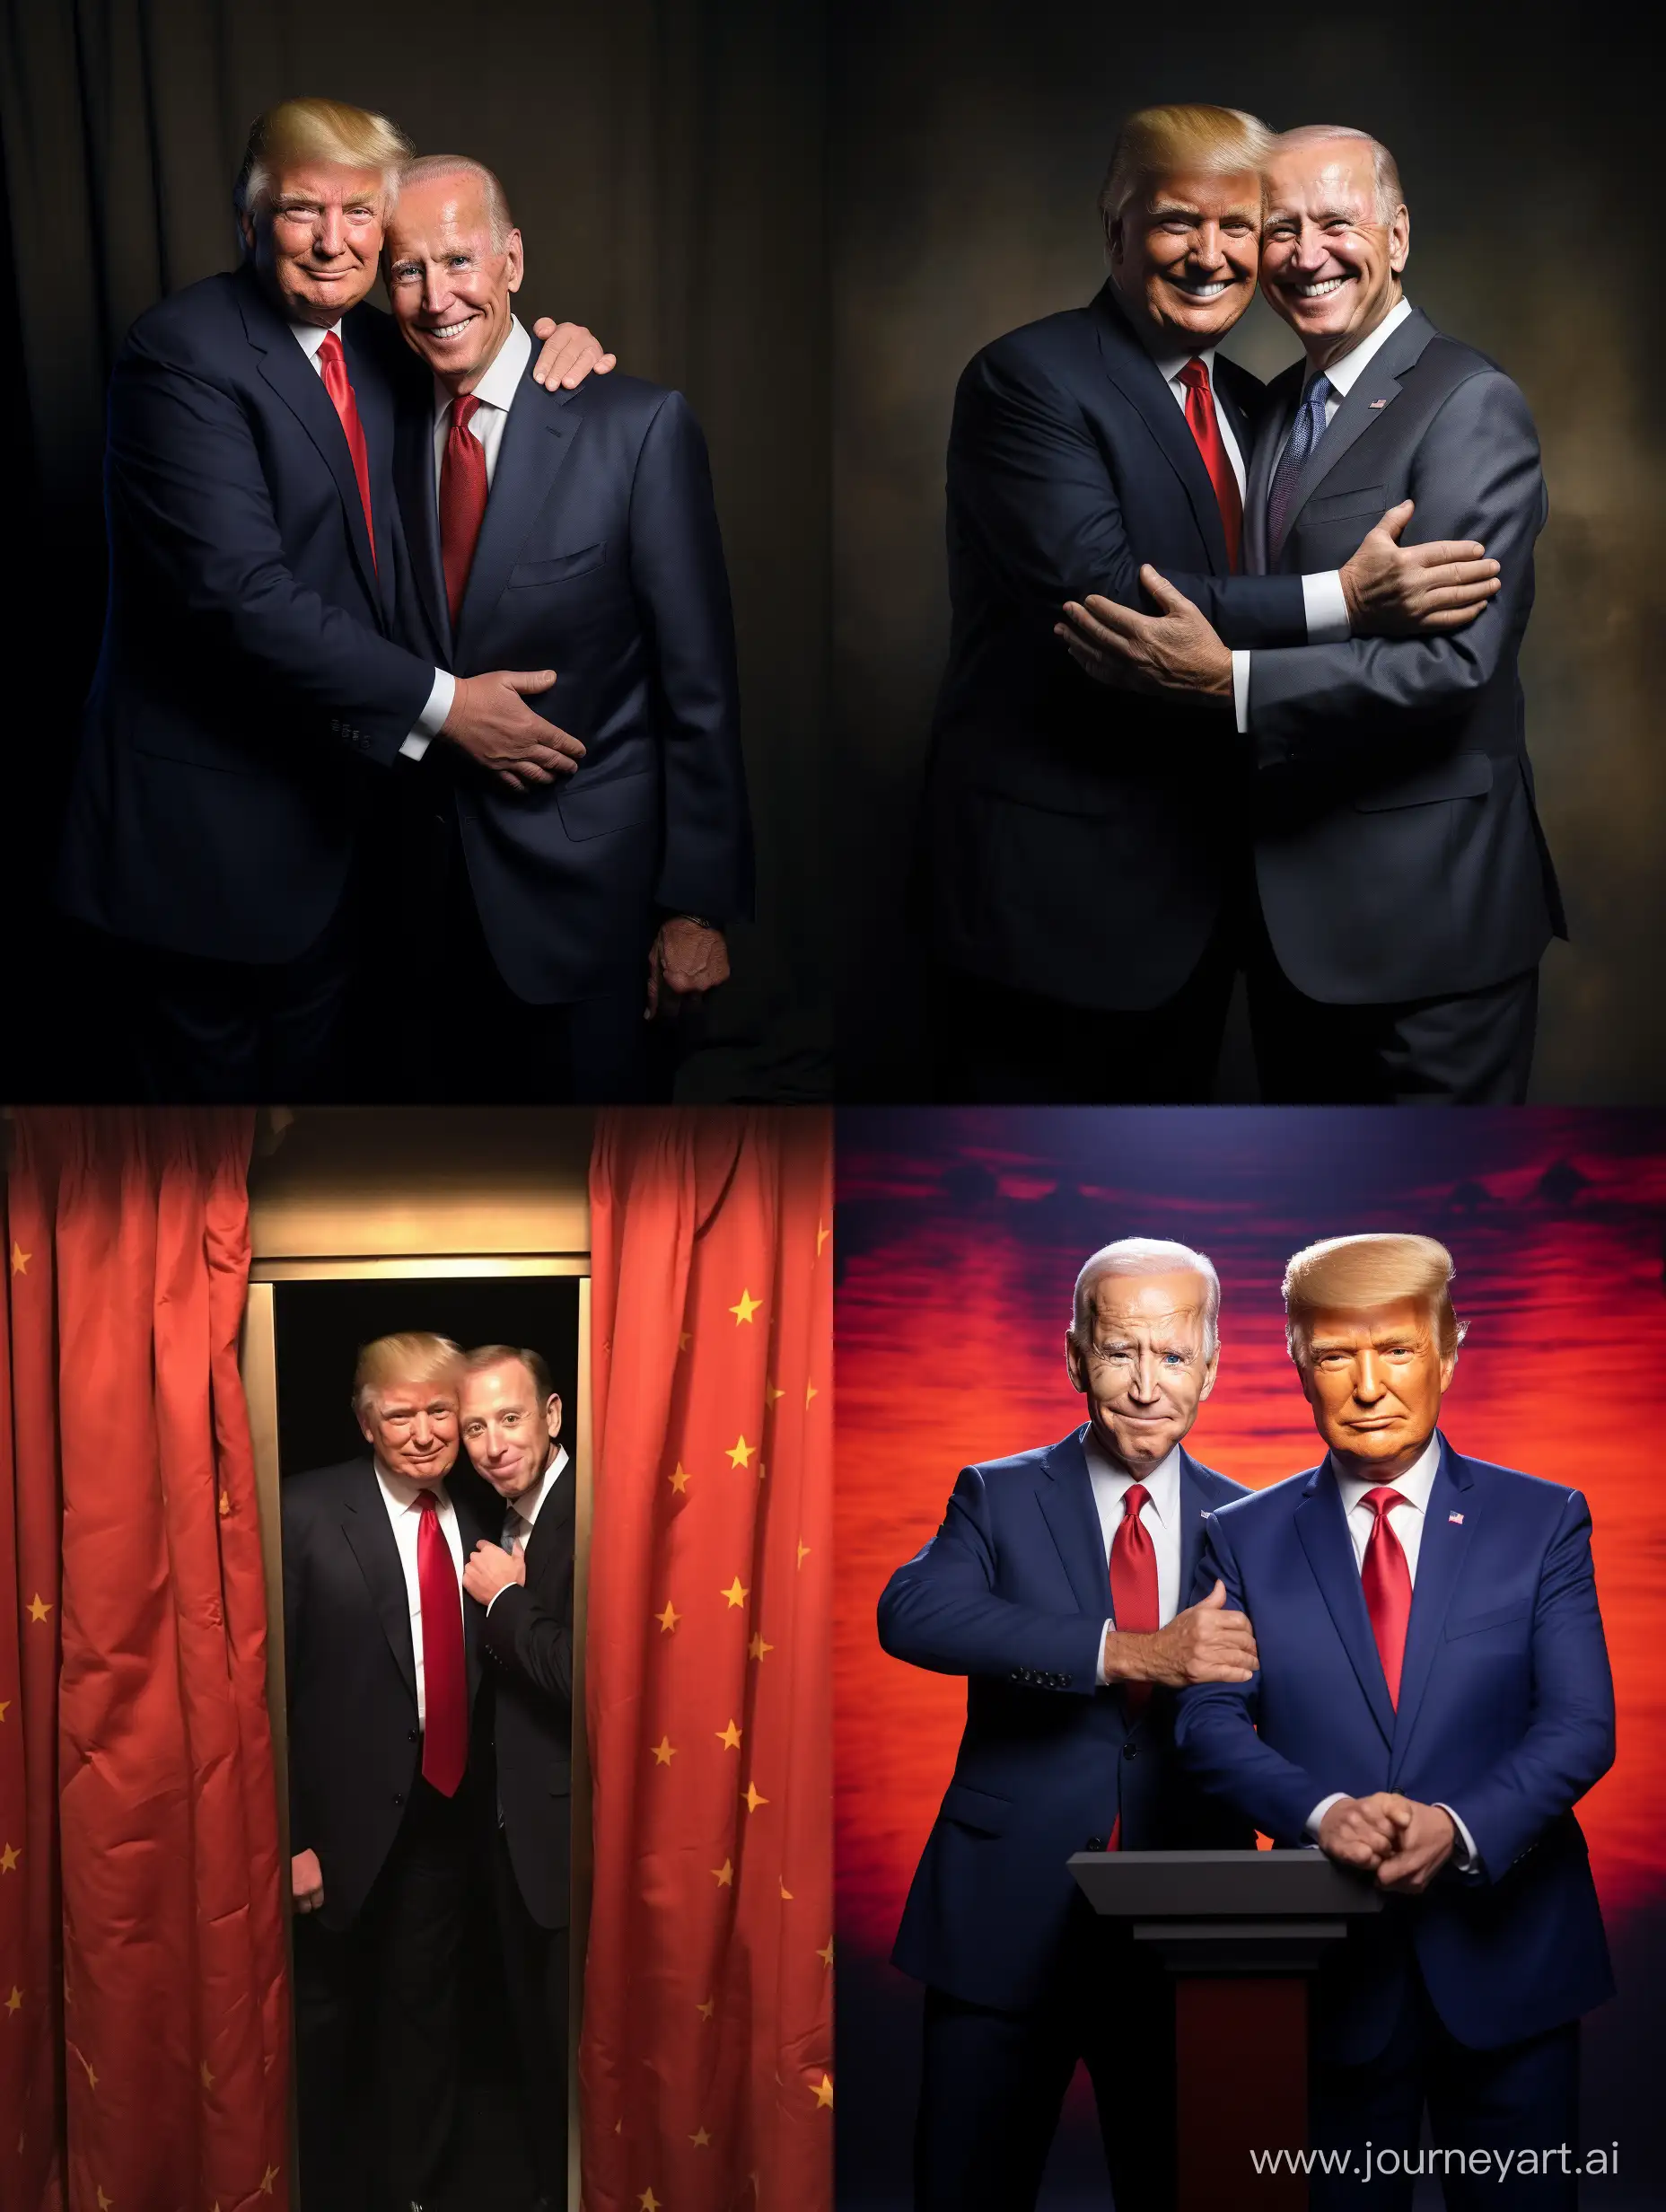 Trump-and-Biden-Realistic-Photomaton-Portrait-34-Aspect-Ratio